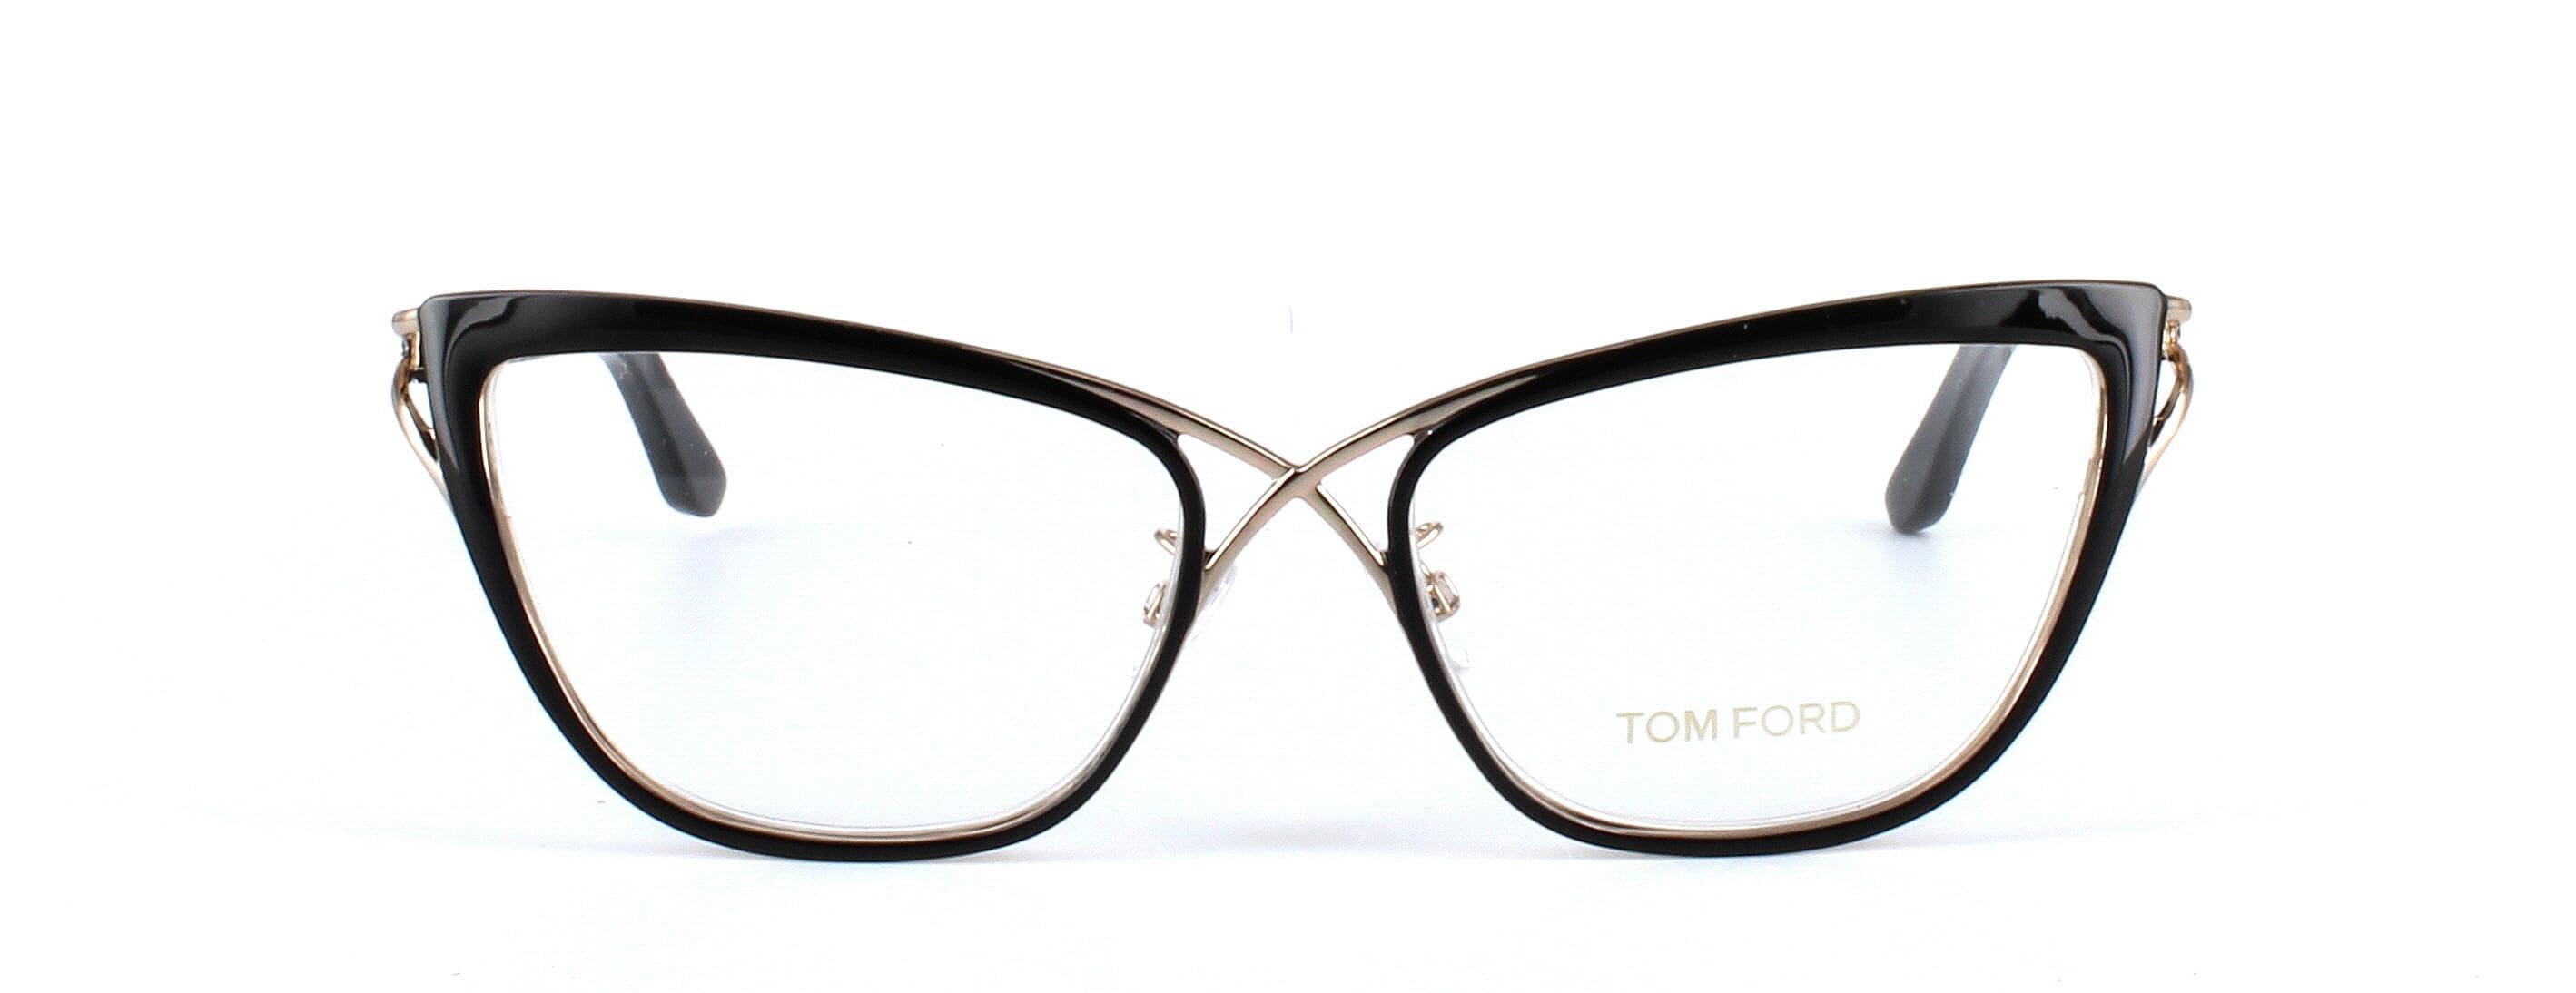 Ladies Tom Ford glasses - black & gold - image 5